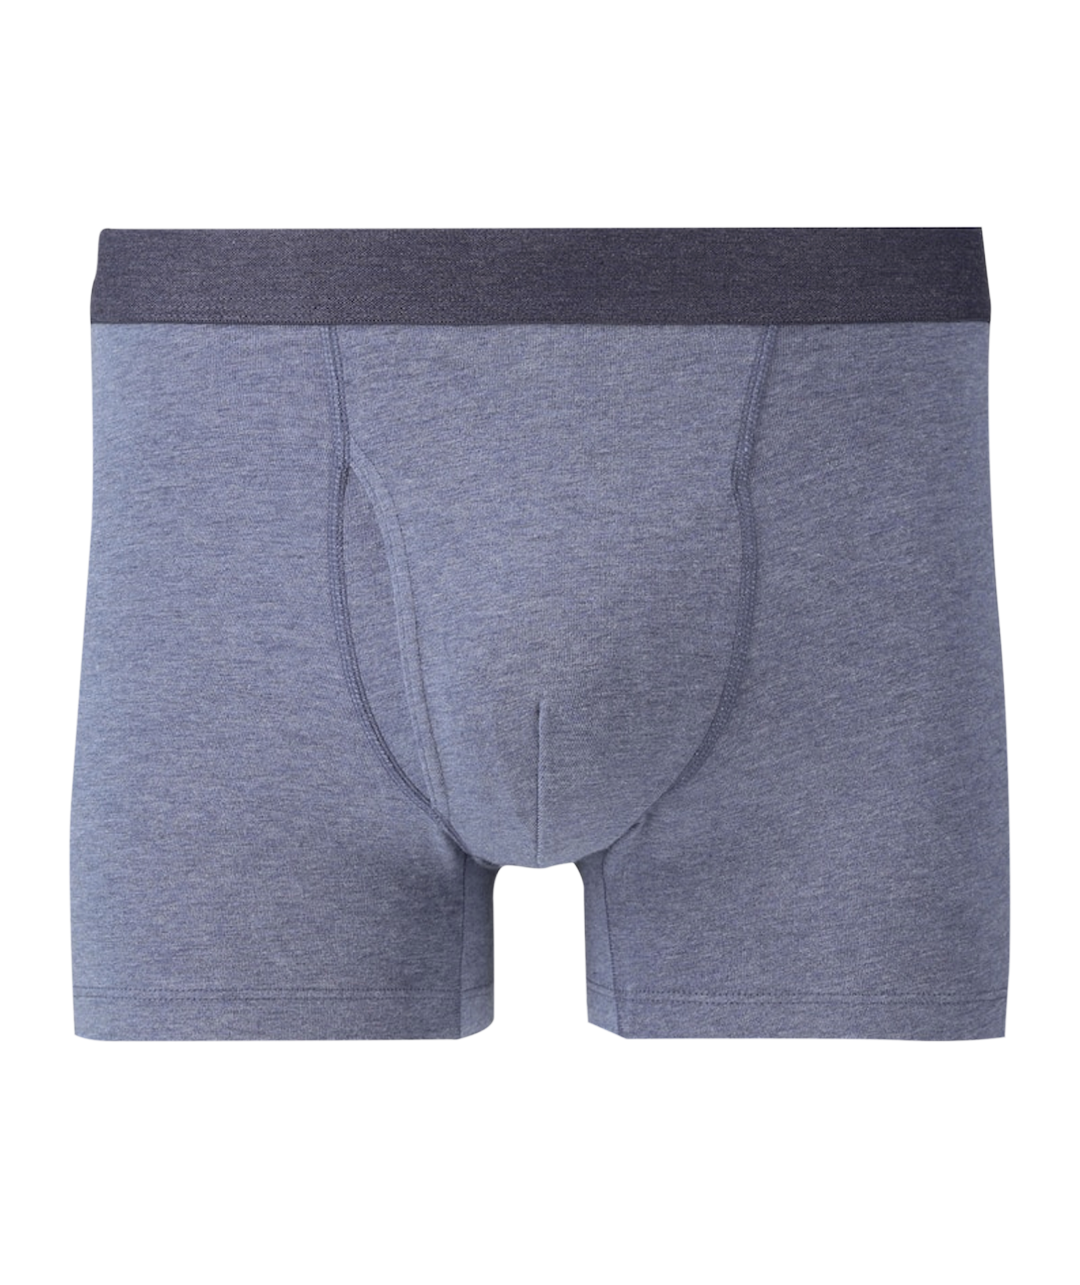 underpants vs underwear